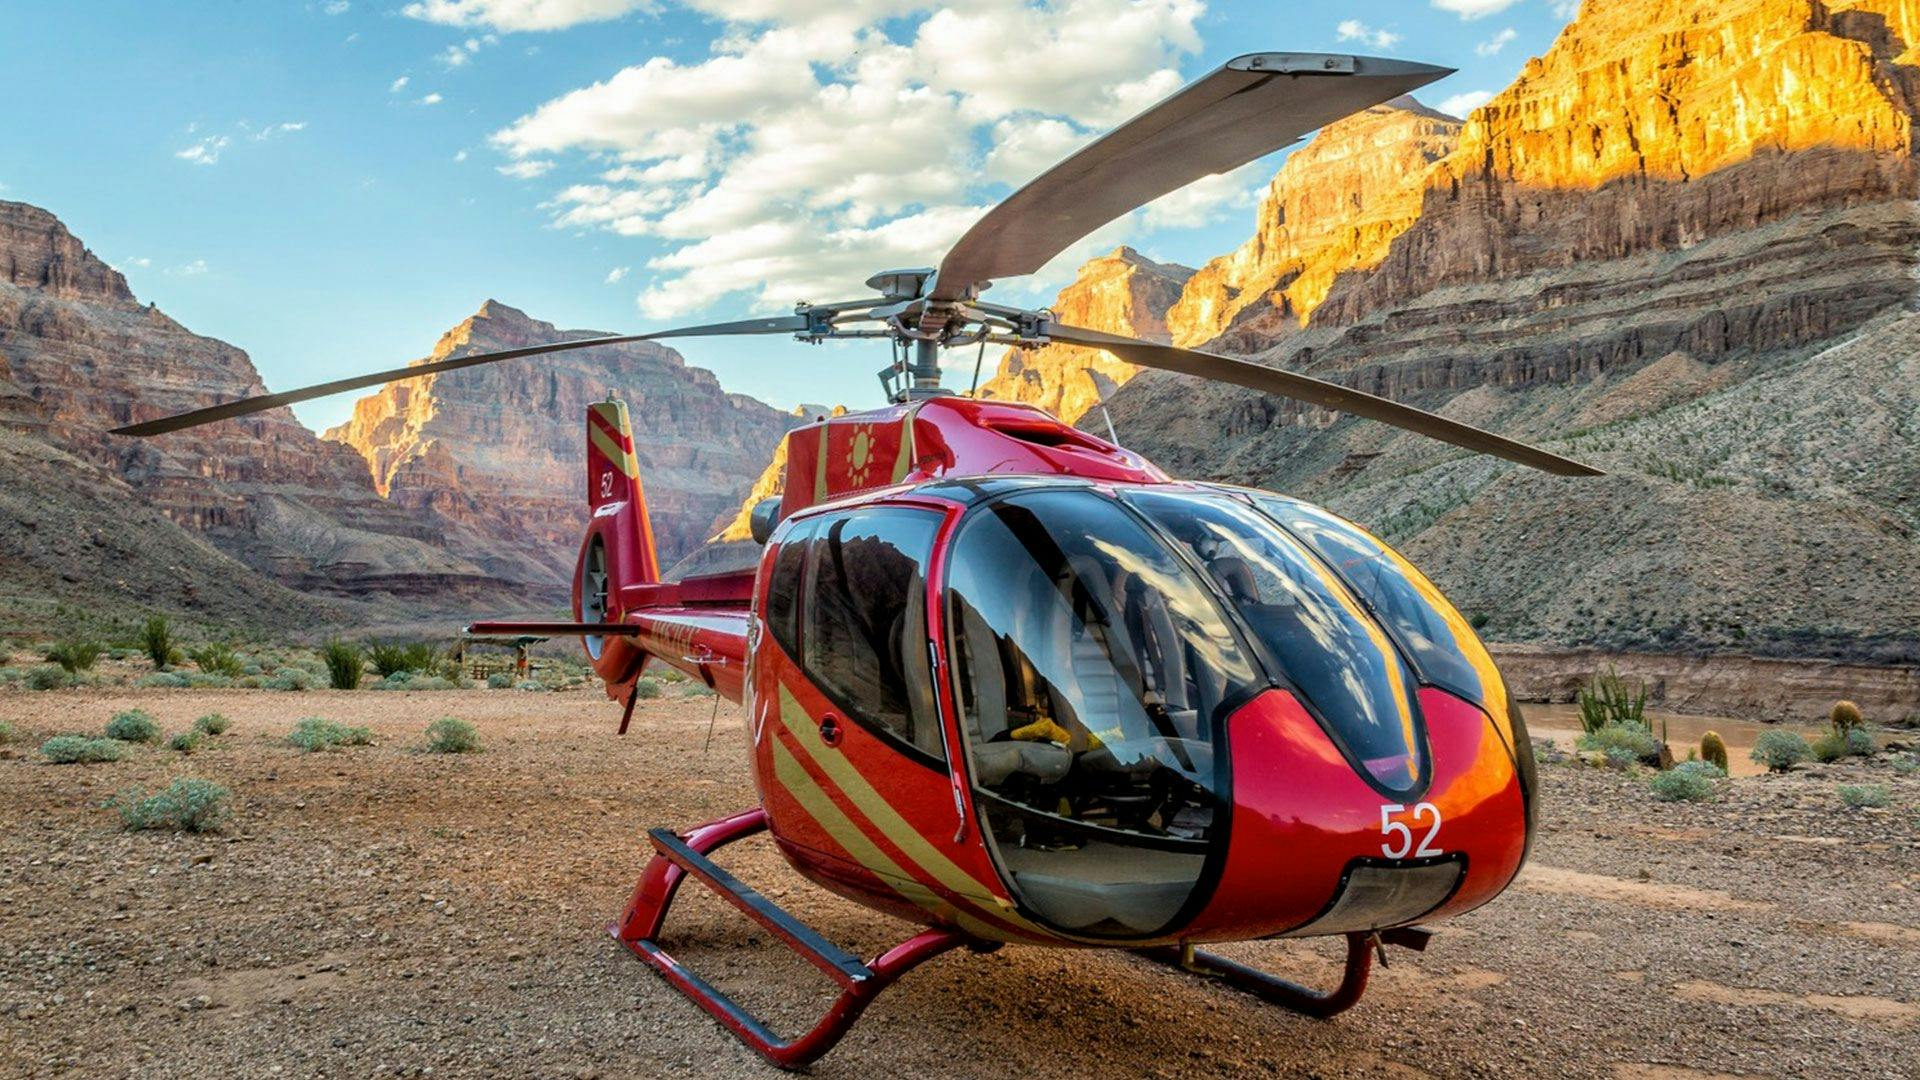 Helikopter Tour zum Grand Canyon inkl. Skywalk